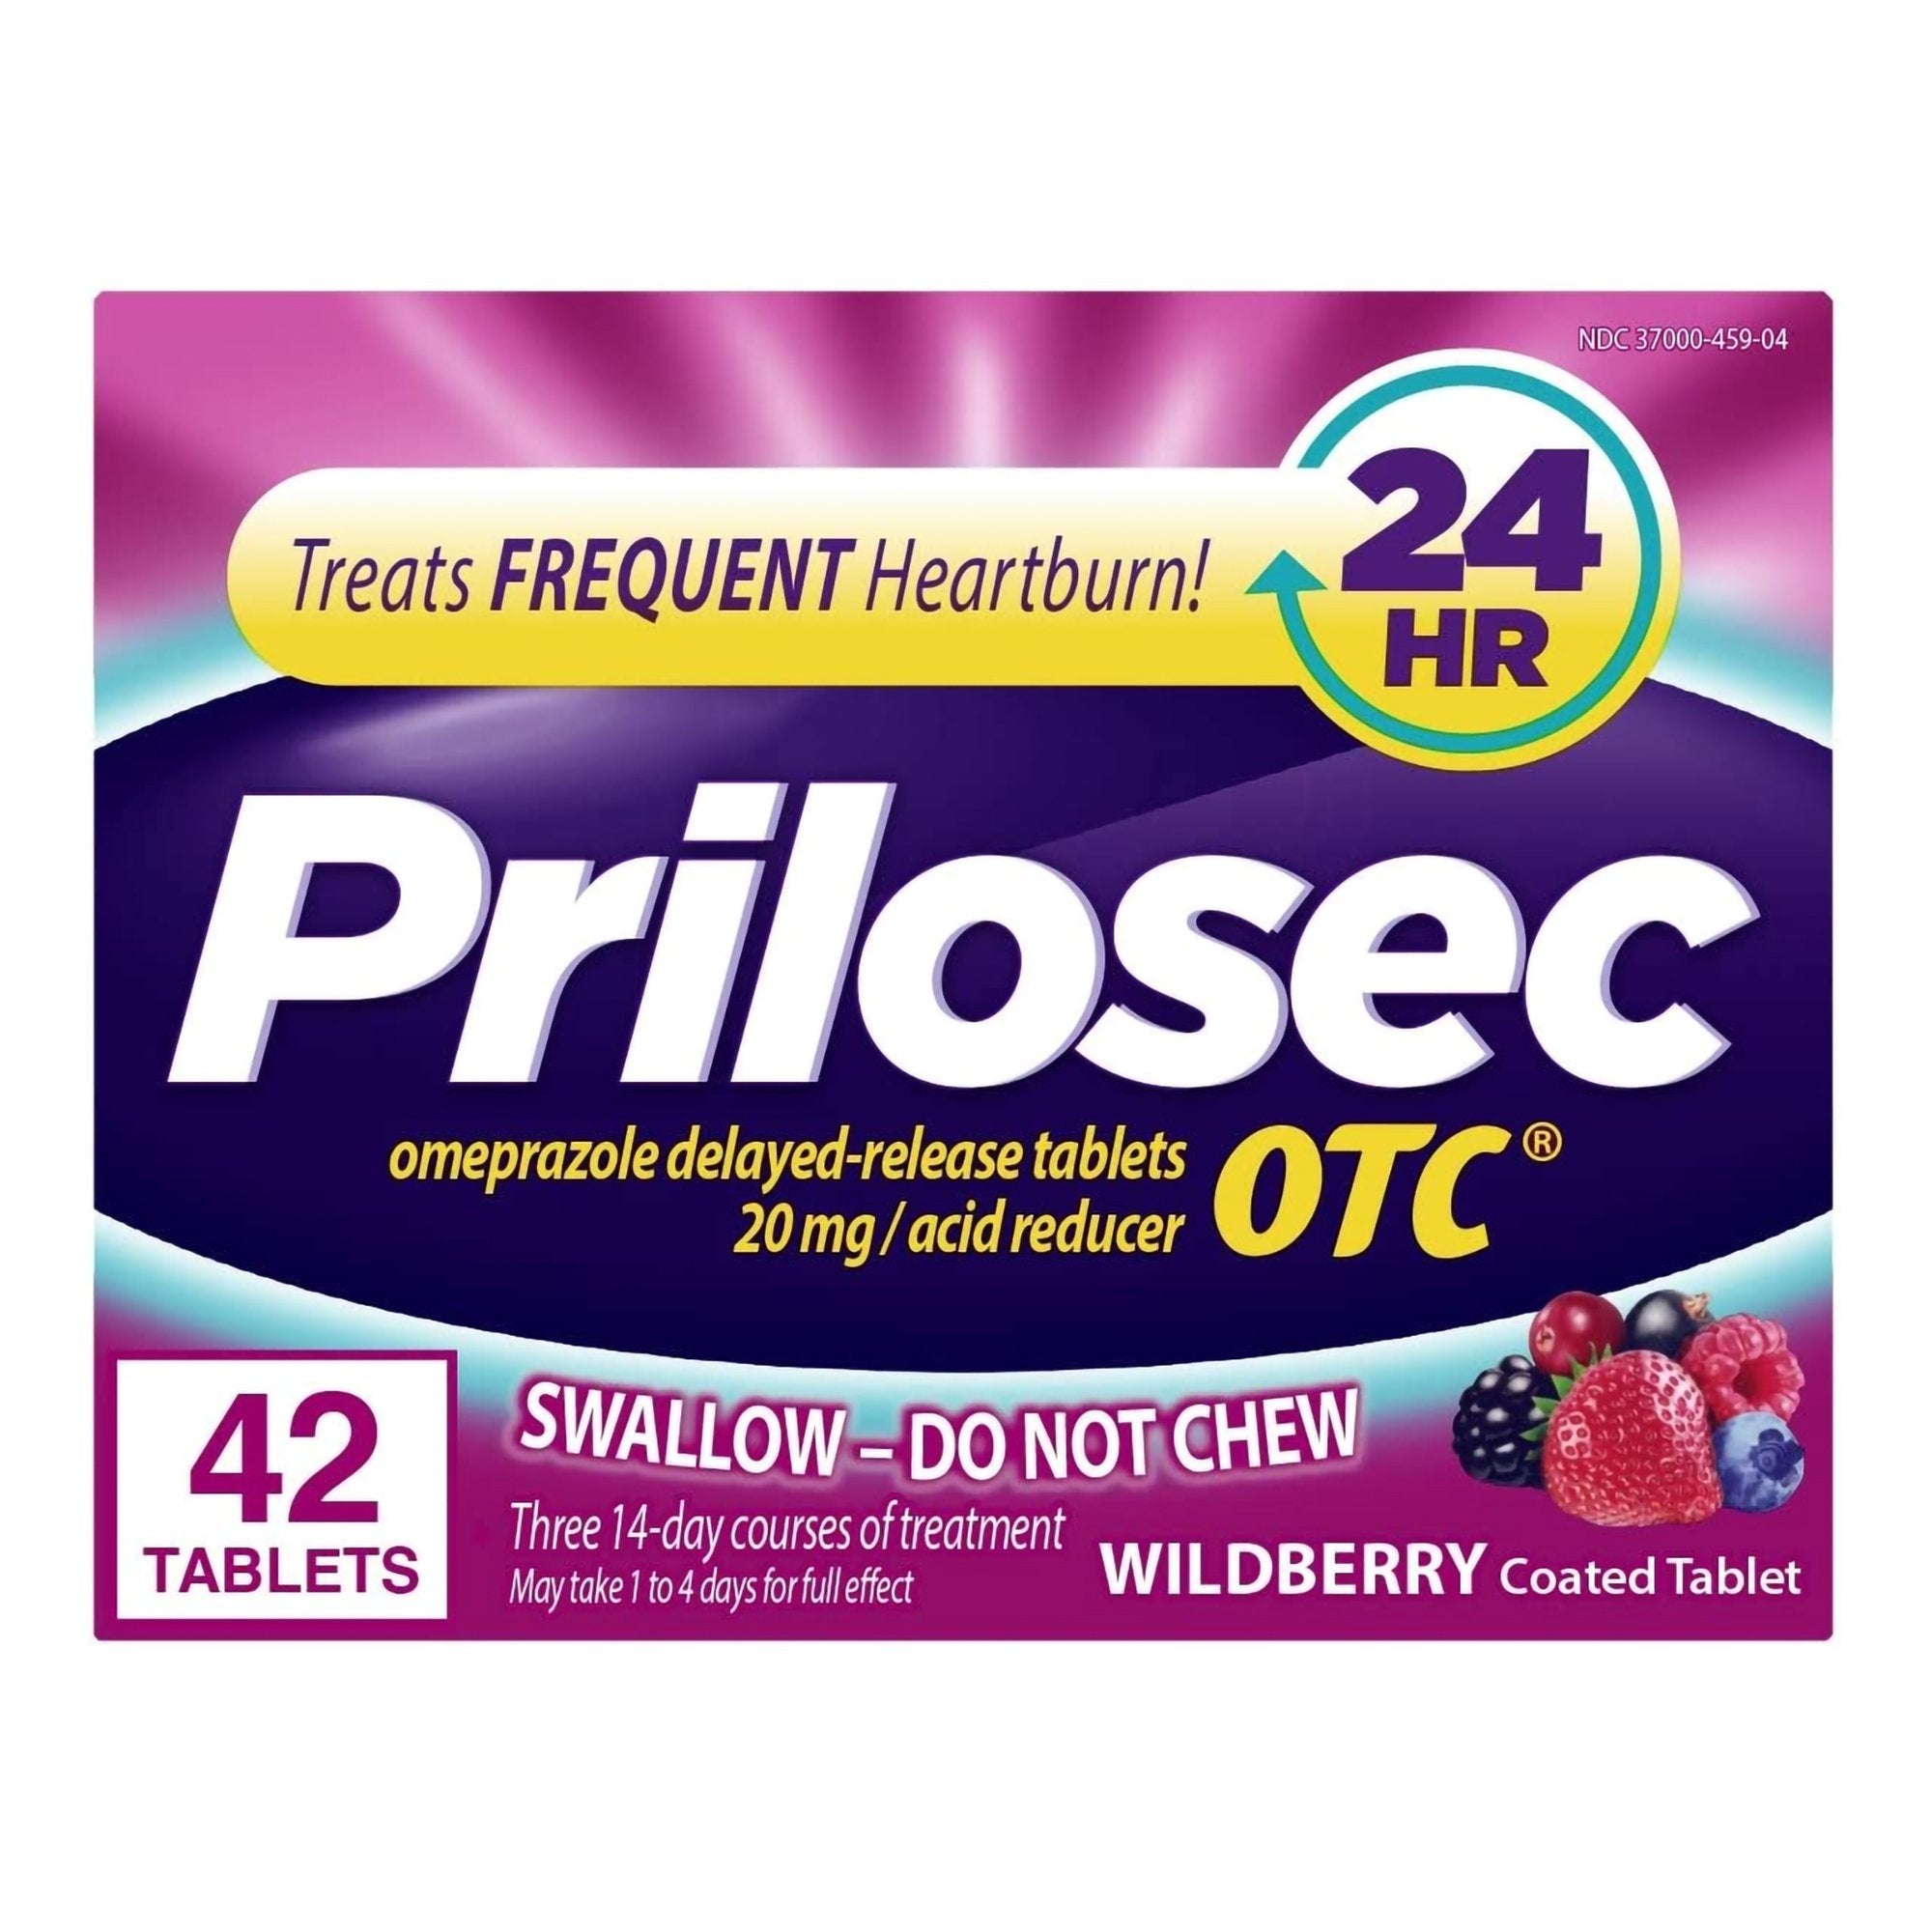 Antacid Prilosec OTC® 20 mg Strength Tablet 42 per Box